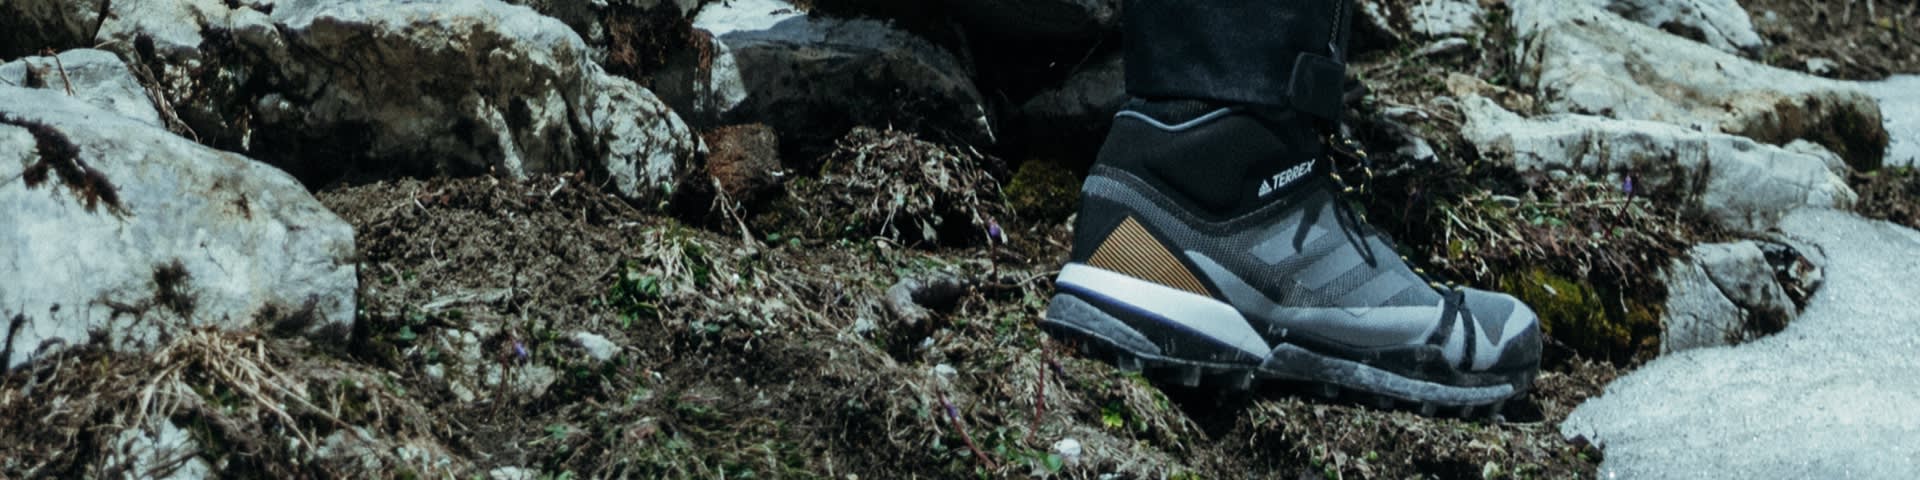 Perdido Parásito Malgastar Zapatillas adidas TERREX para hombre | Comprar bambas online en adidas